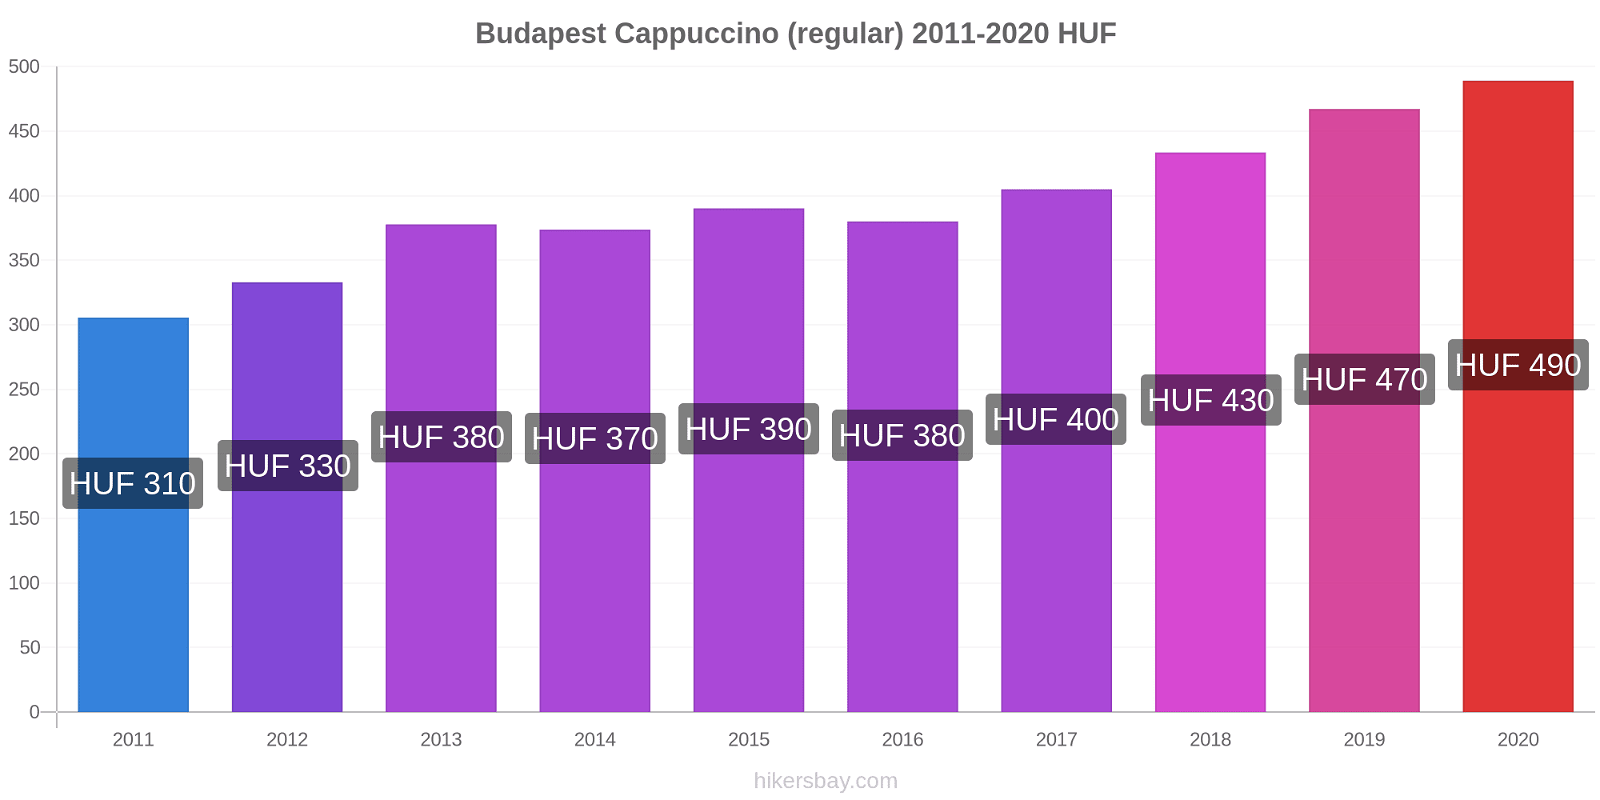 Budapest price changes Cappuccino (regular) hikersbay.com